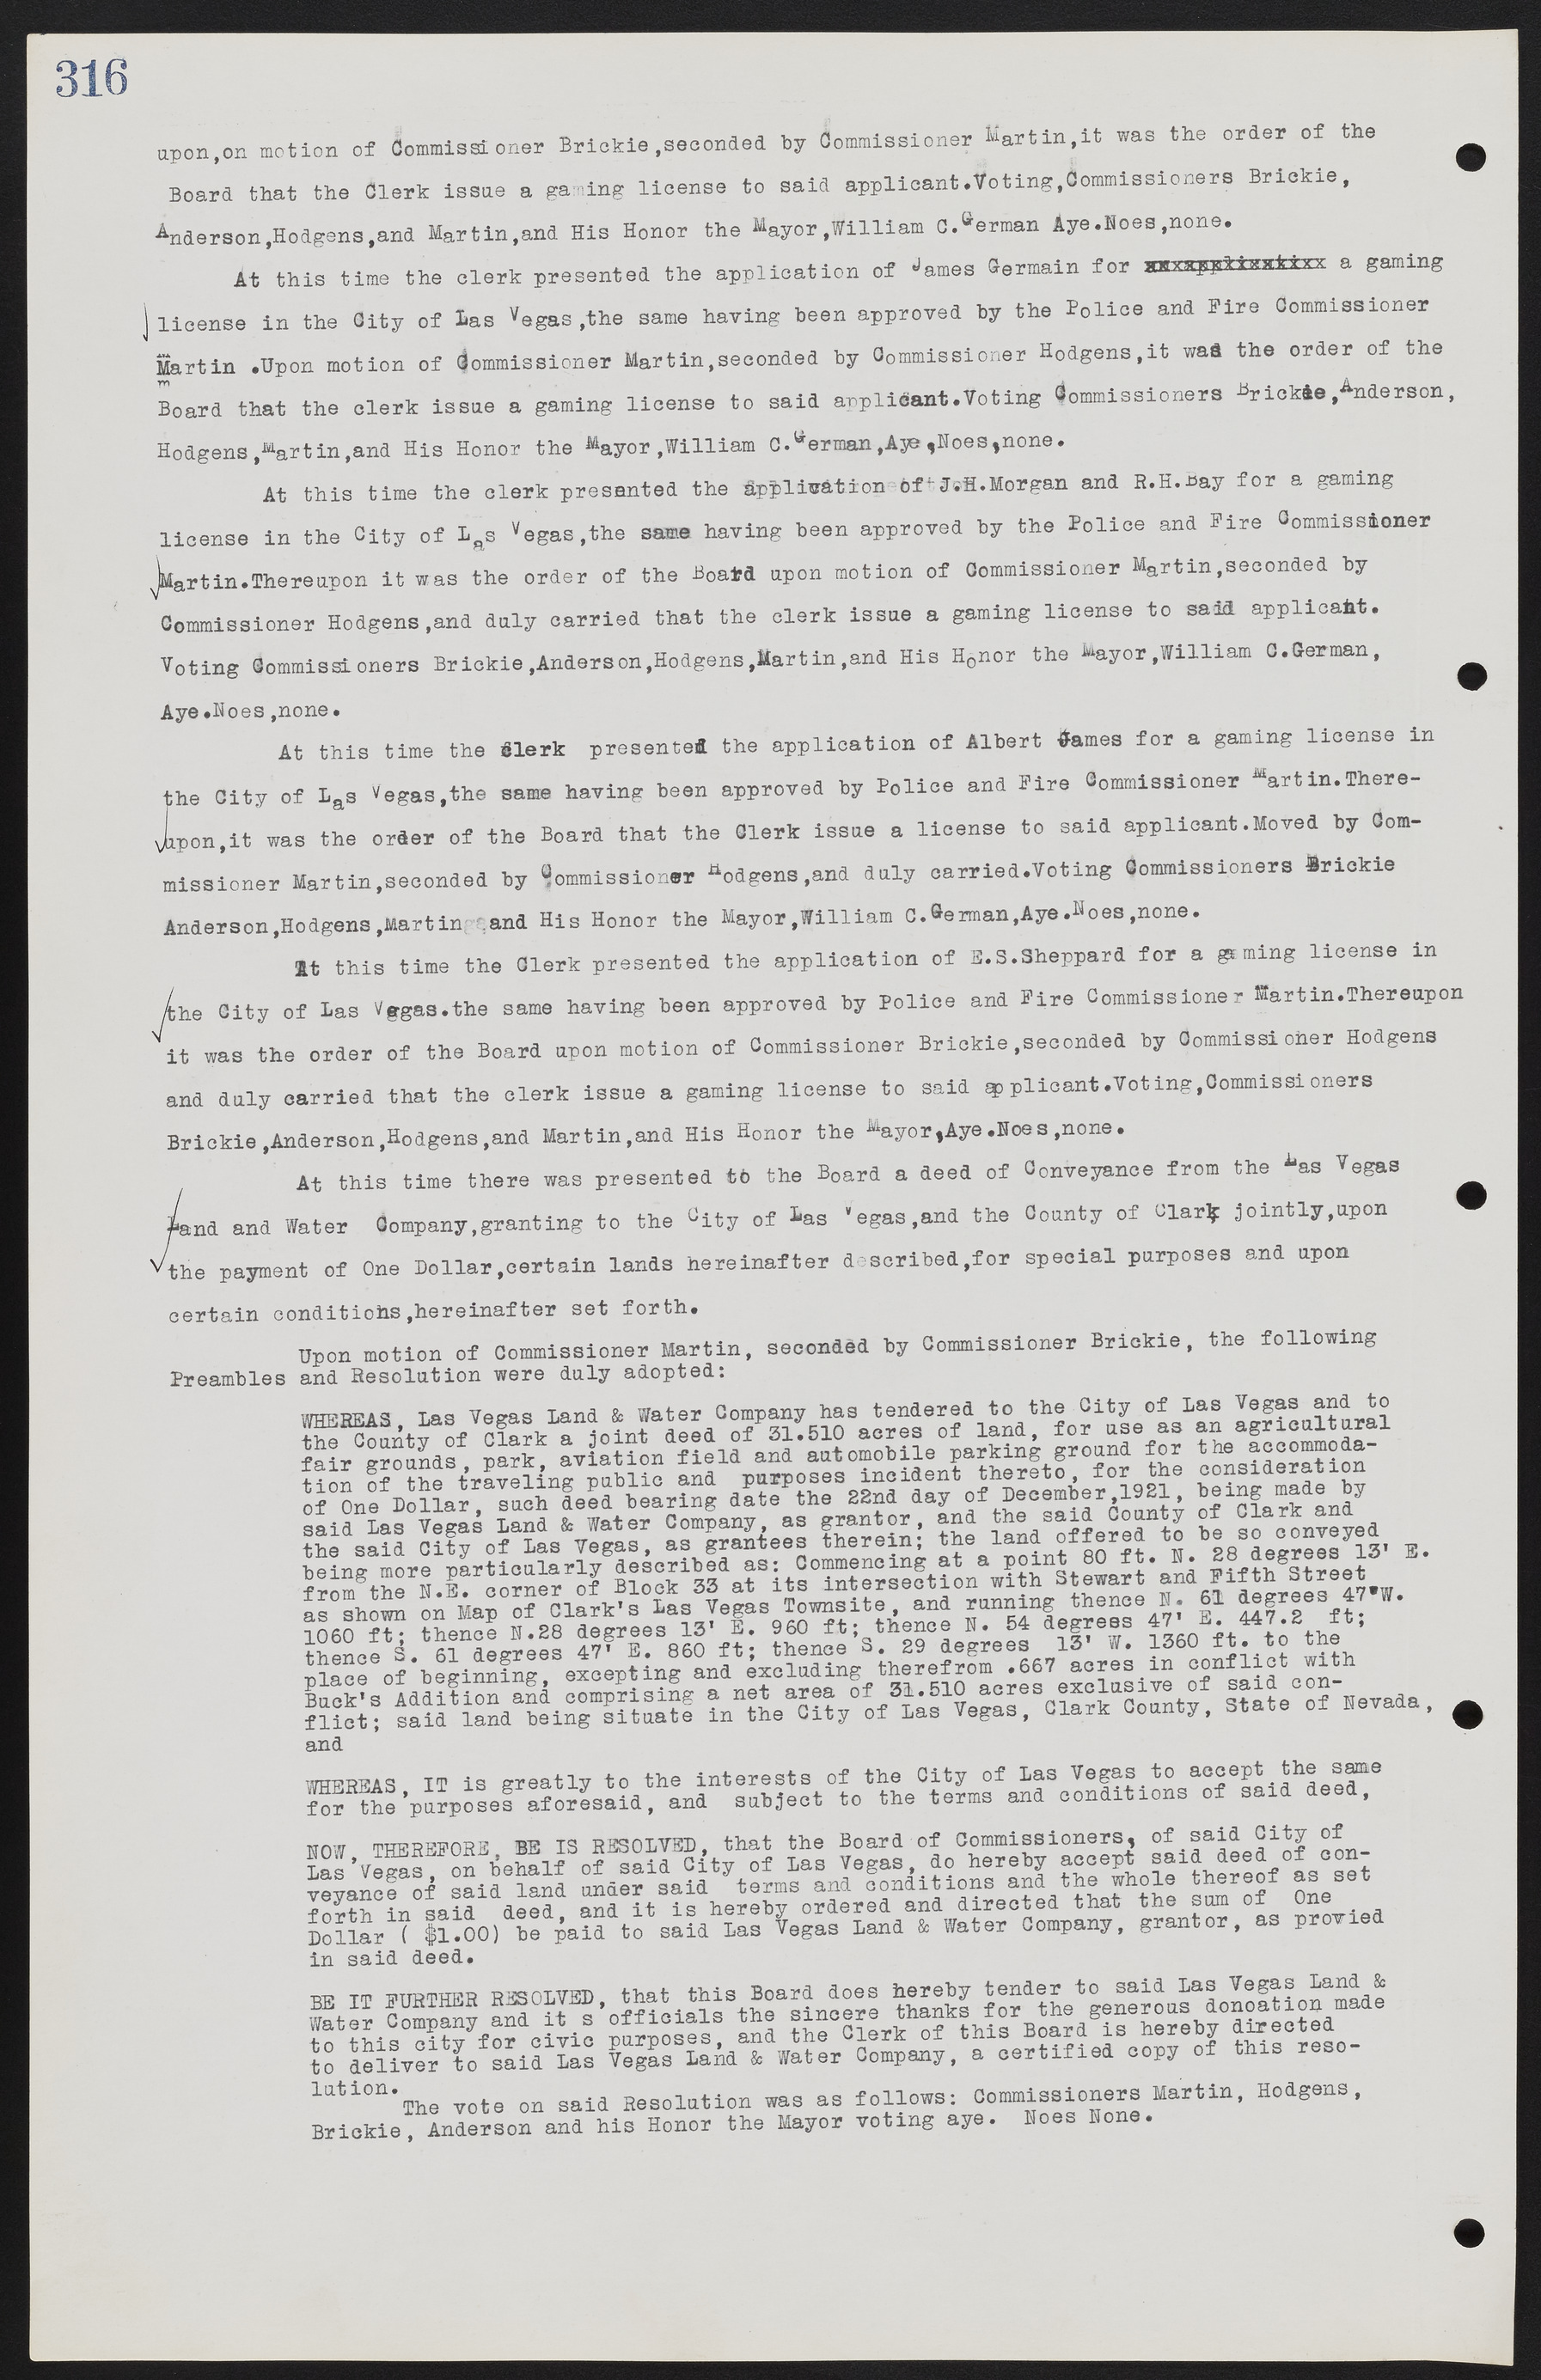 Las Vegas City Commission Minutes, June 22, 1911 to February 7, 1922, lvc000001-332